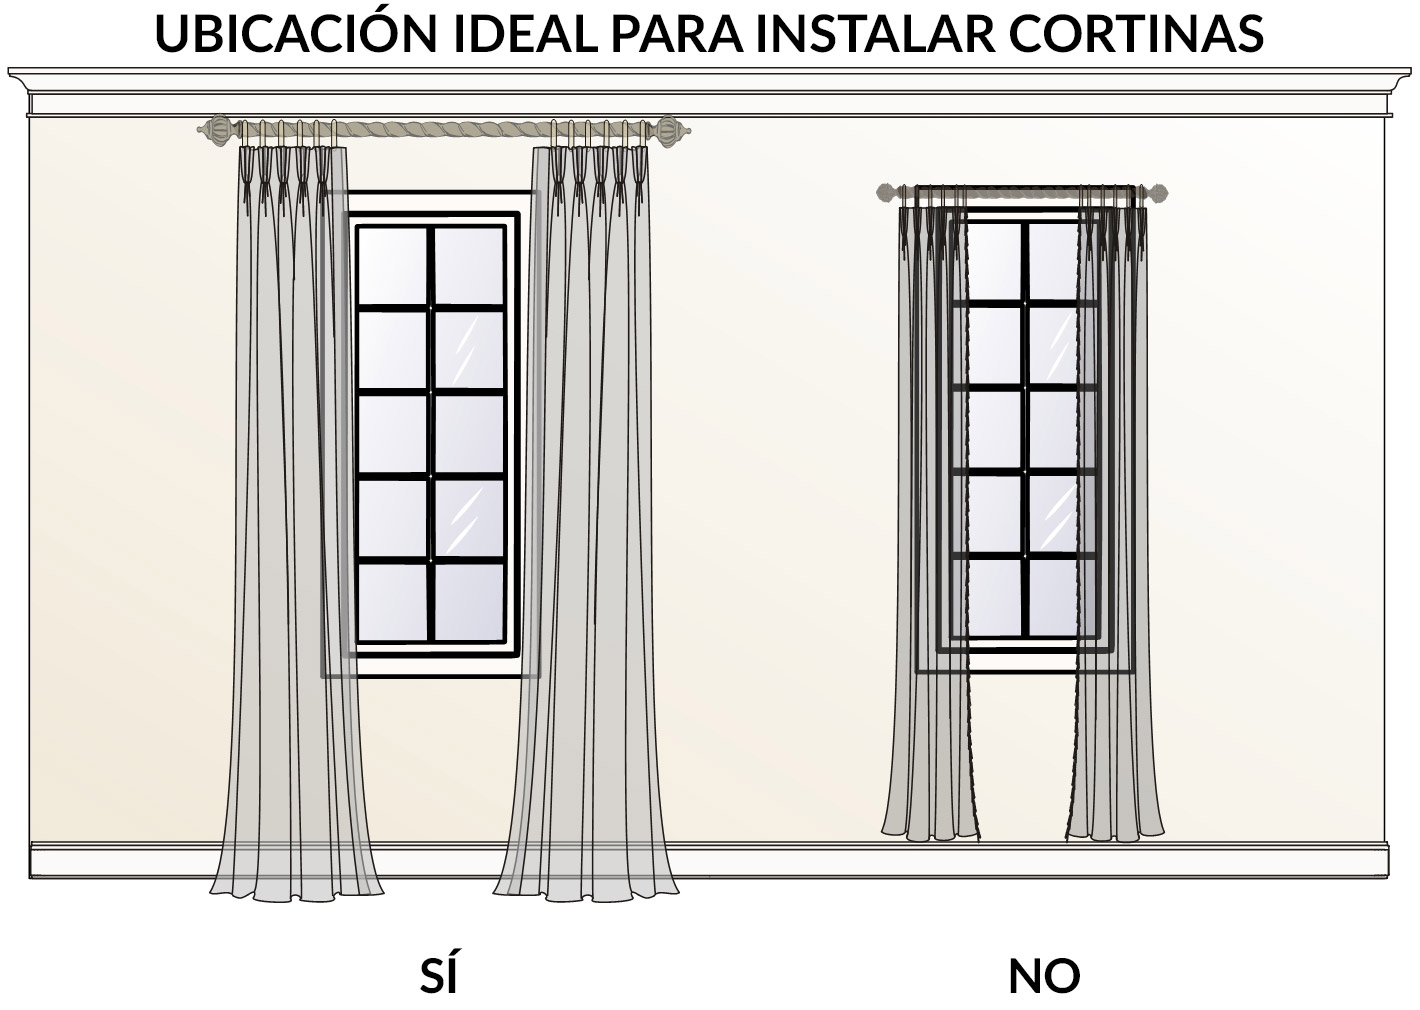 QUE CORTINA USAR EN VENTANAS IRREGULARES? – cortinas